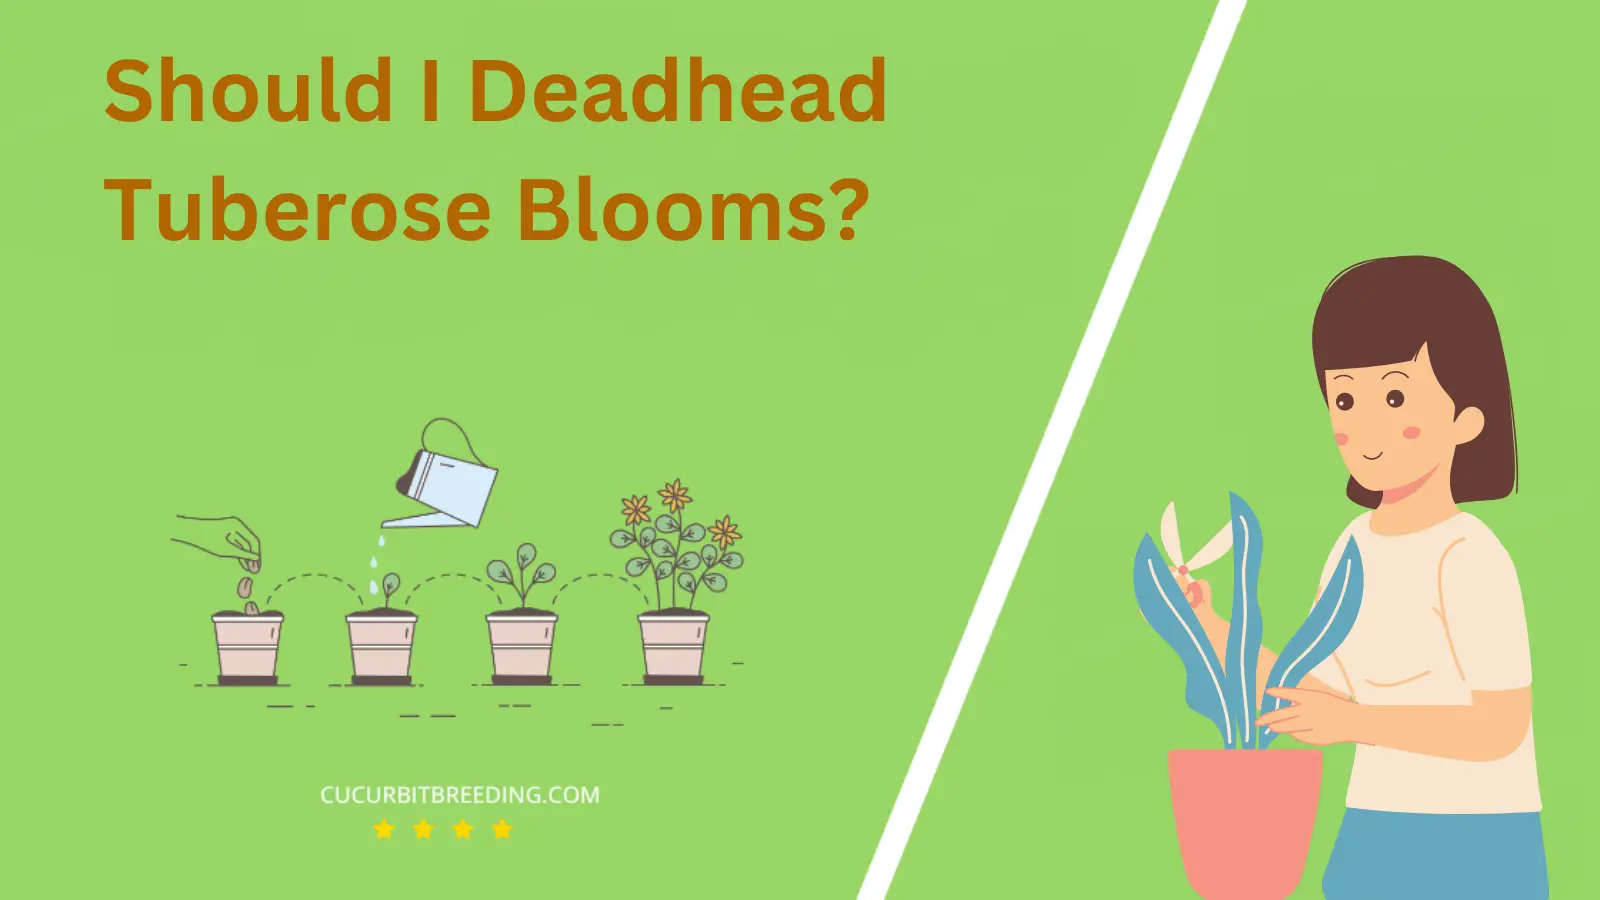 Should I Deadhead Tuberose Blooms?